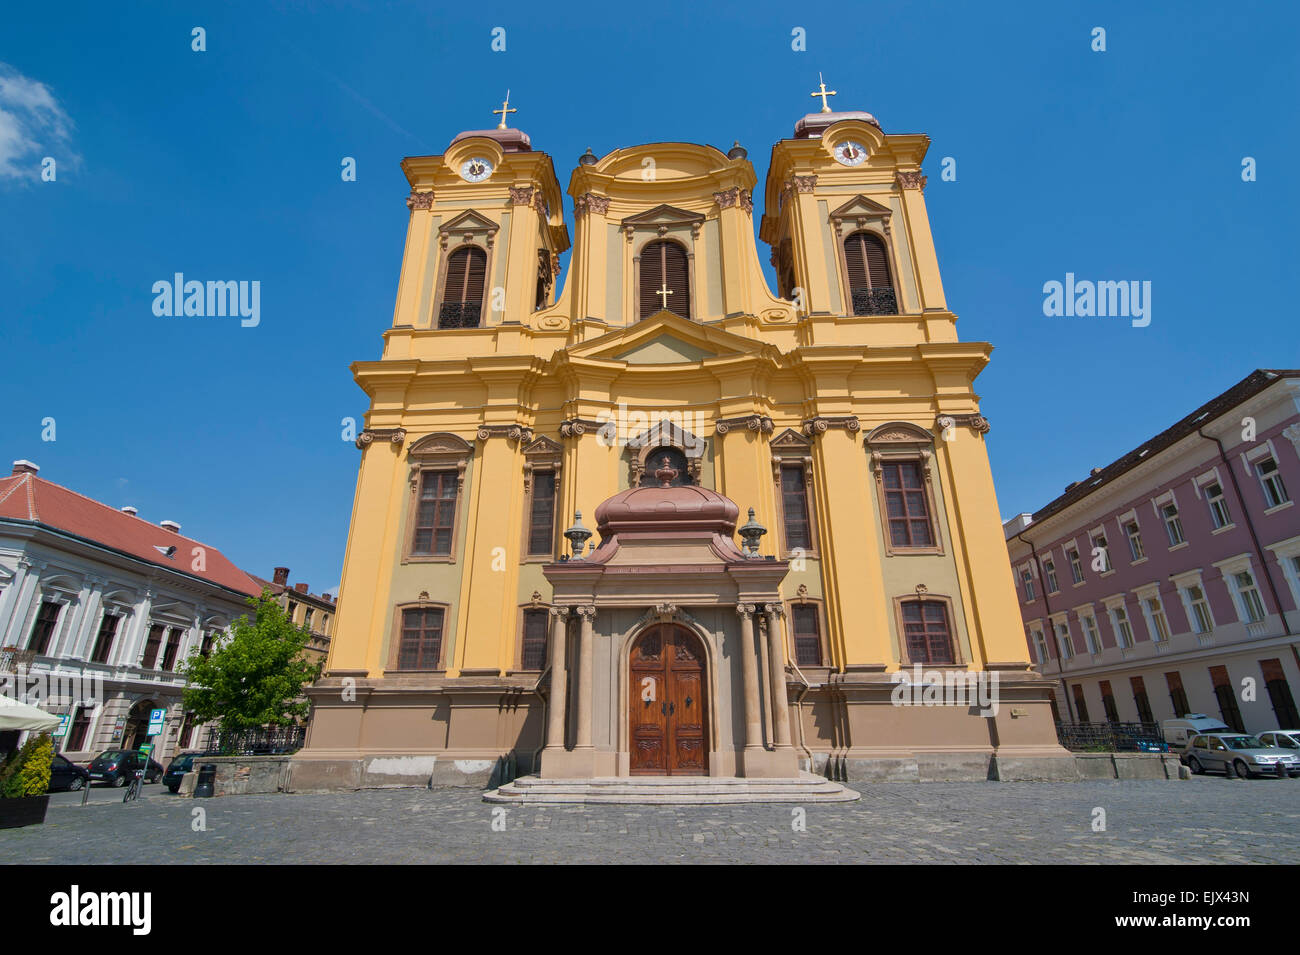 Cathedral of Saint George, Unioni square, Temeswar or Timisoara, Romania Stock Photo